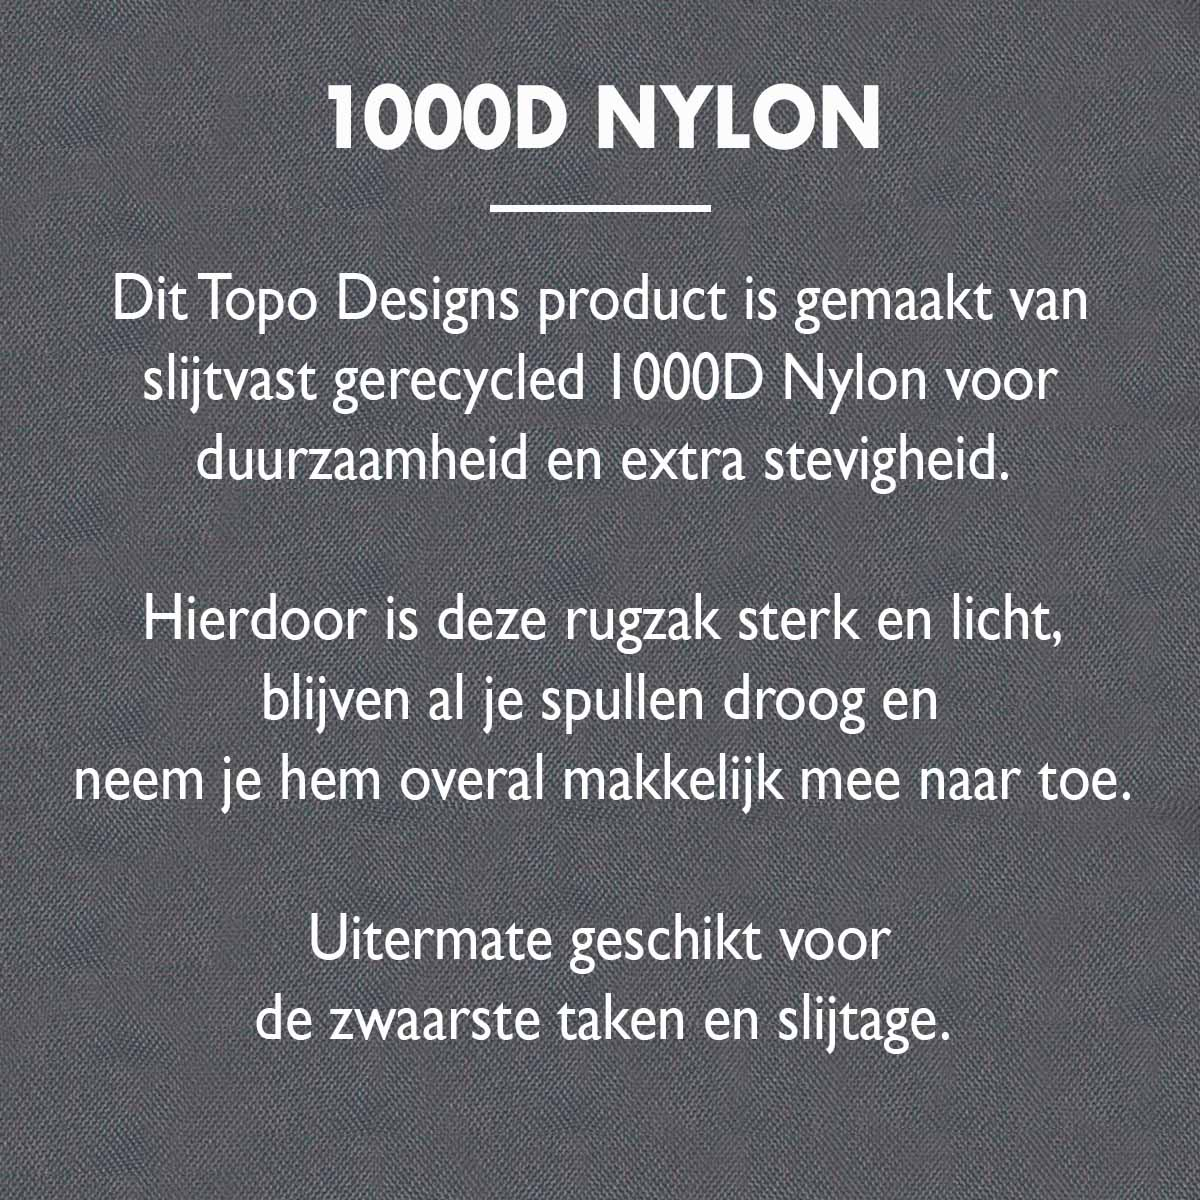 Topo Designs Daypack Tech, 1000D Nylon